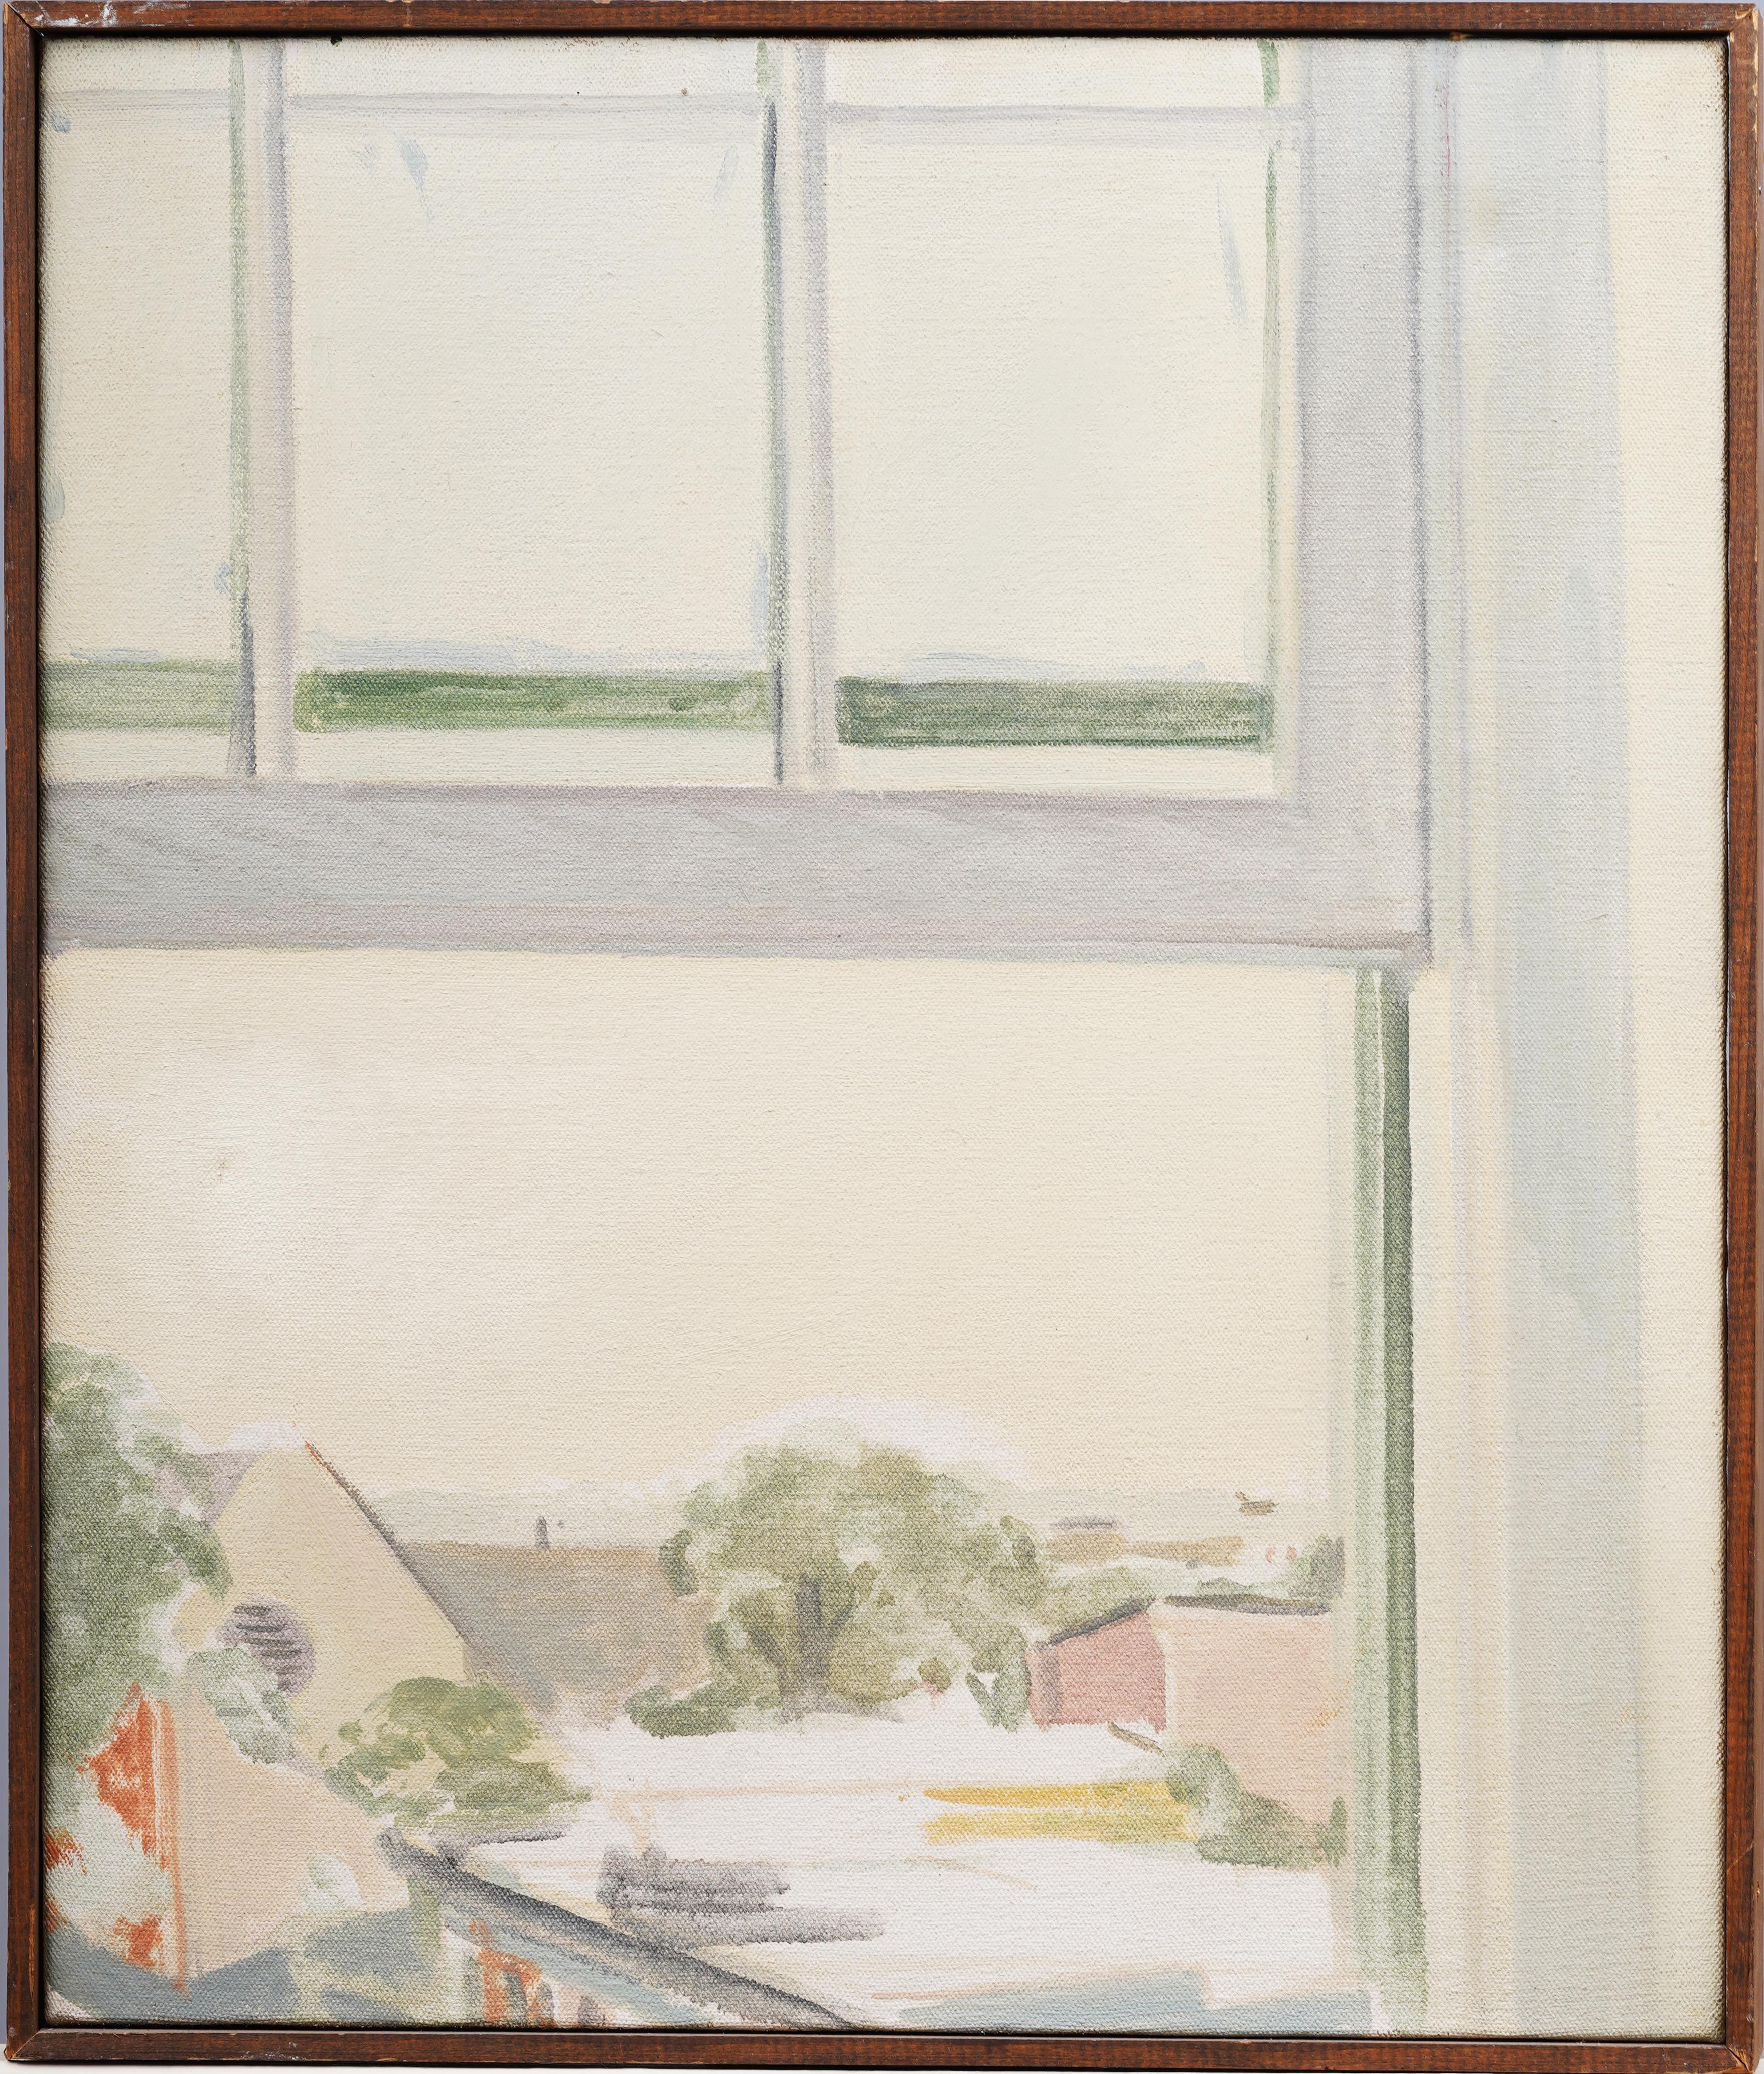 Antique American Modernist Trompe L"Oeil Window Modernist City View Oil Painting